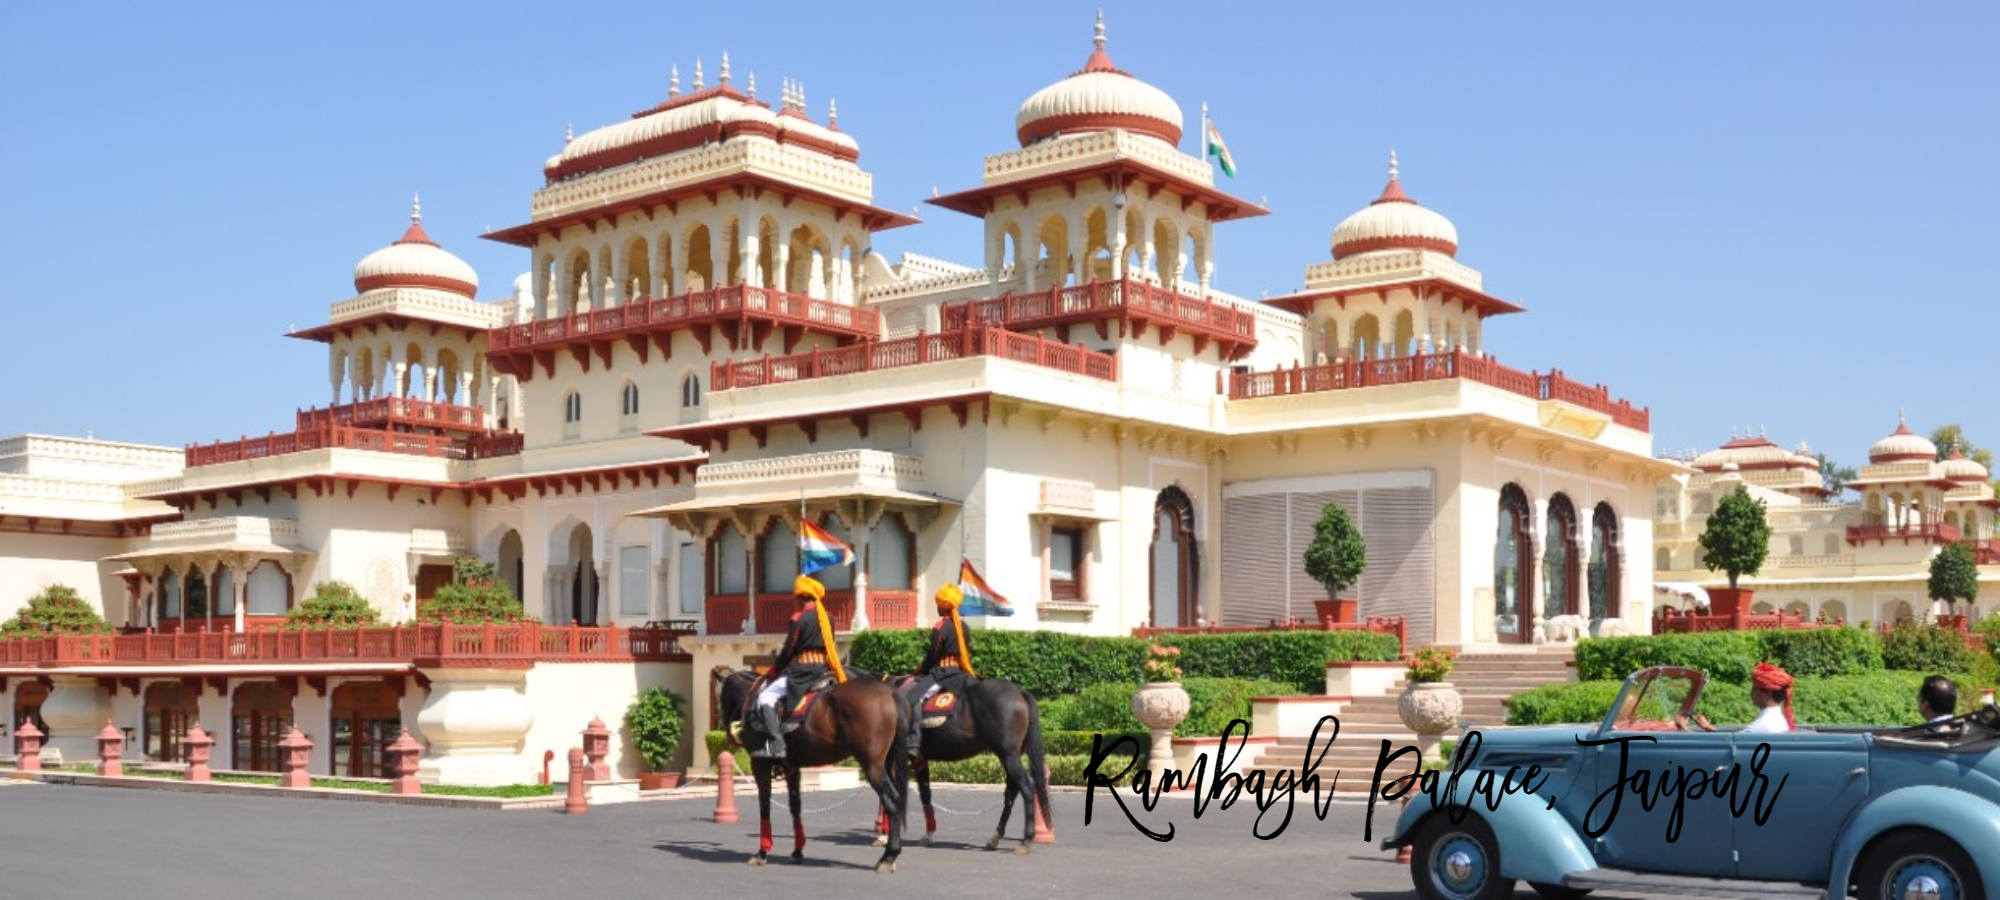 rambagh palace jaipur, jaipur tourist places, best places to visit in jaipur,